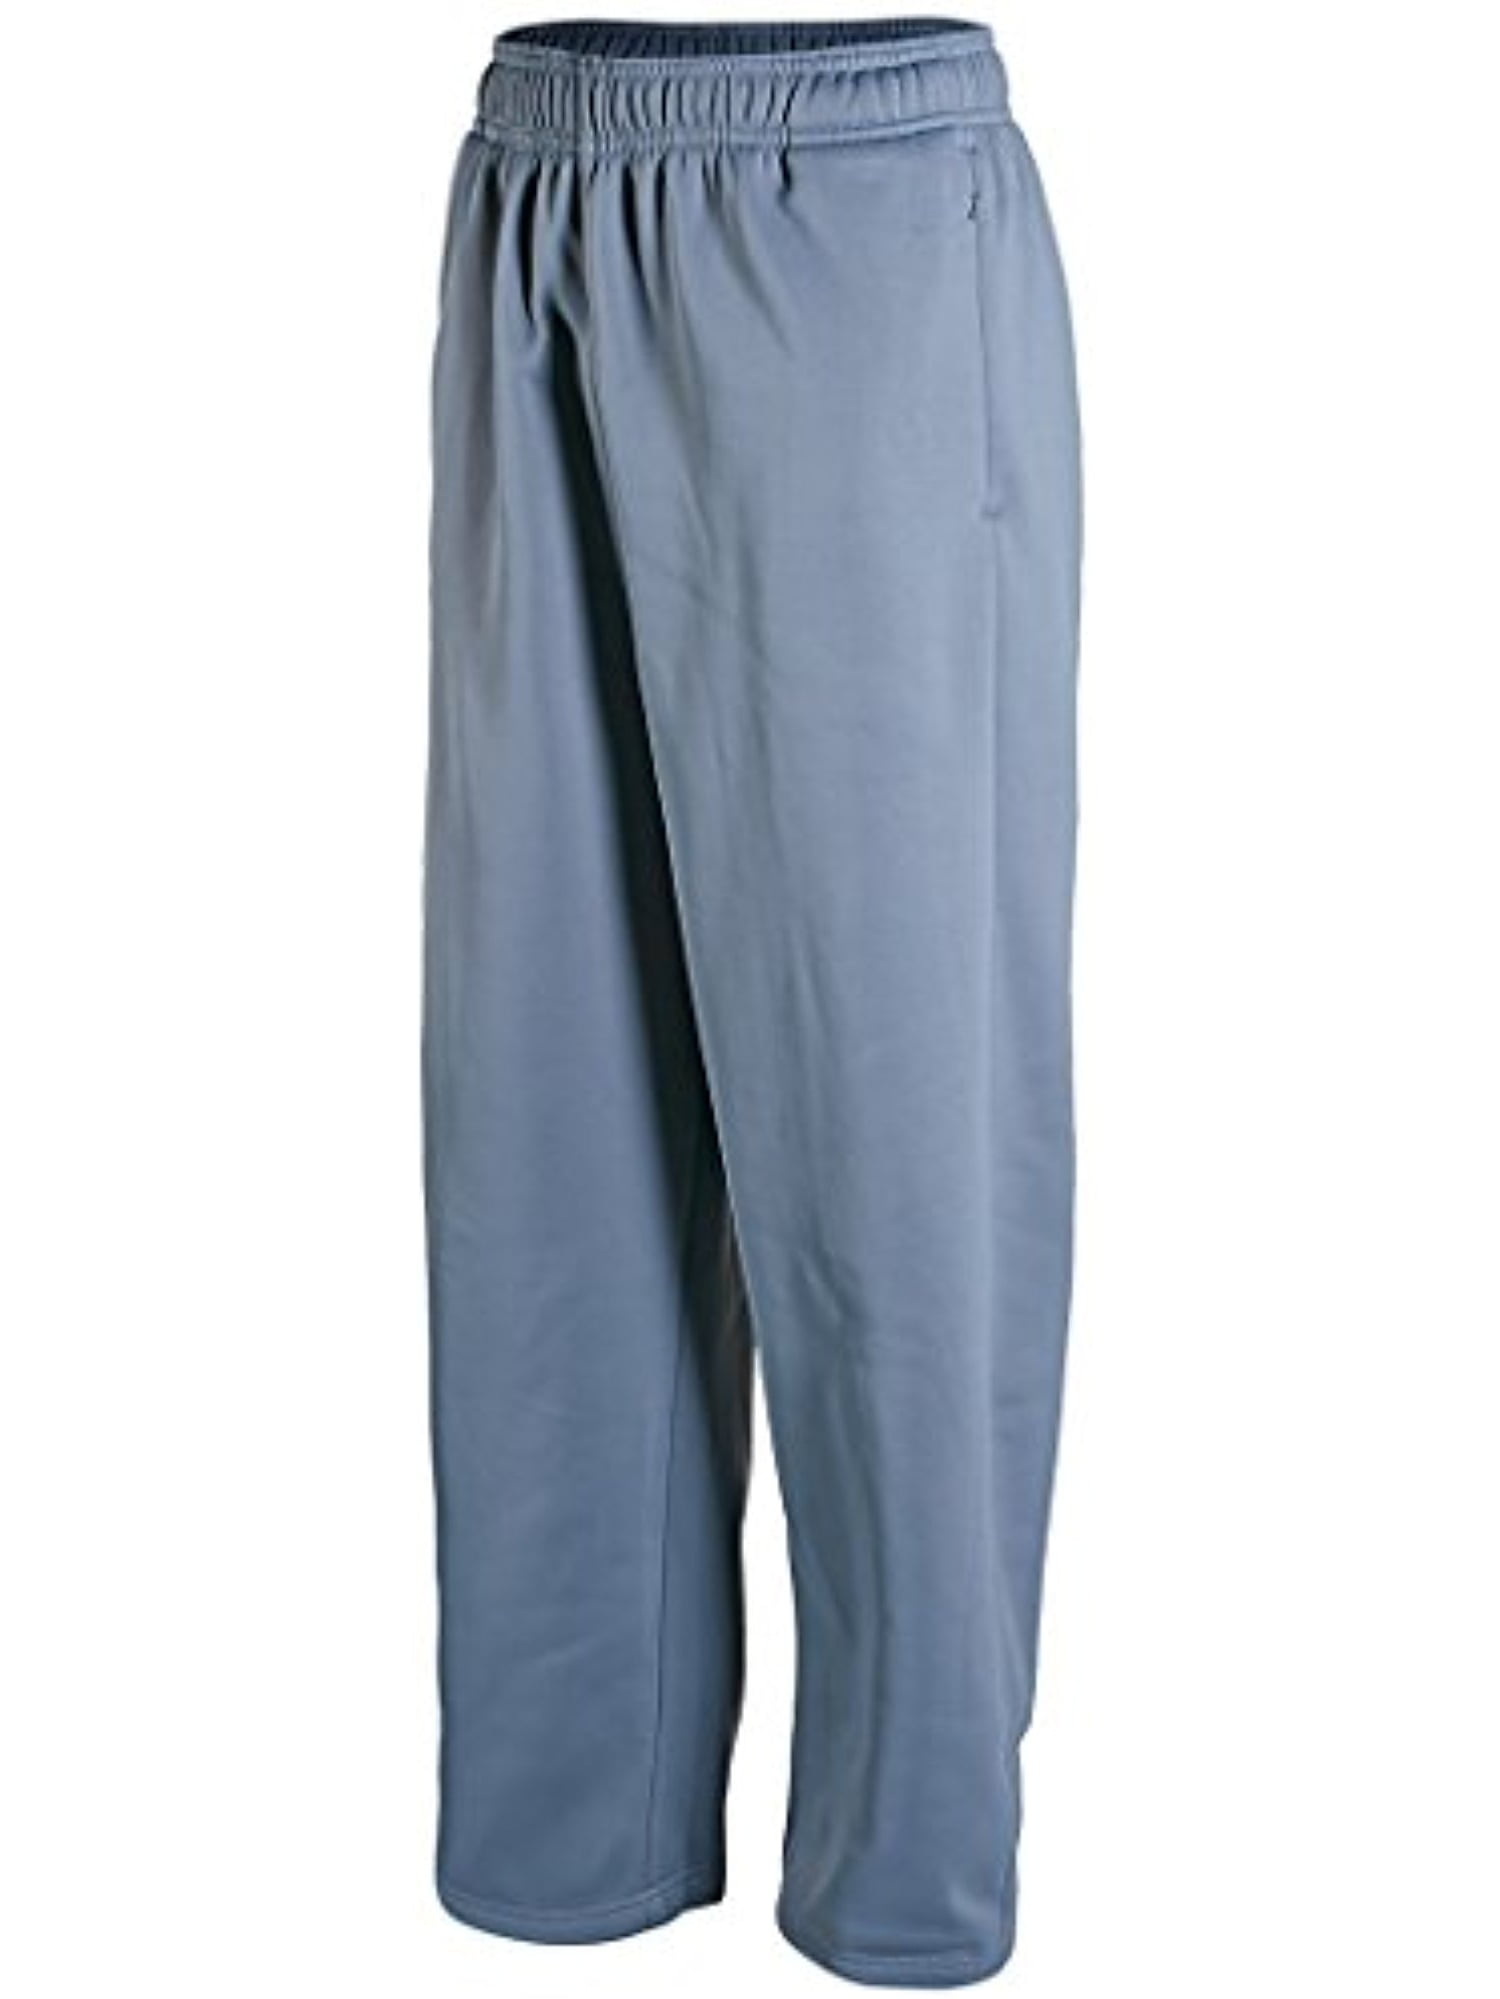 adidas Mens Team Issue Tech Fleece Pant ONIX S - Walmart.com